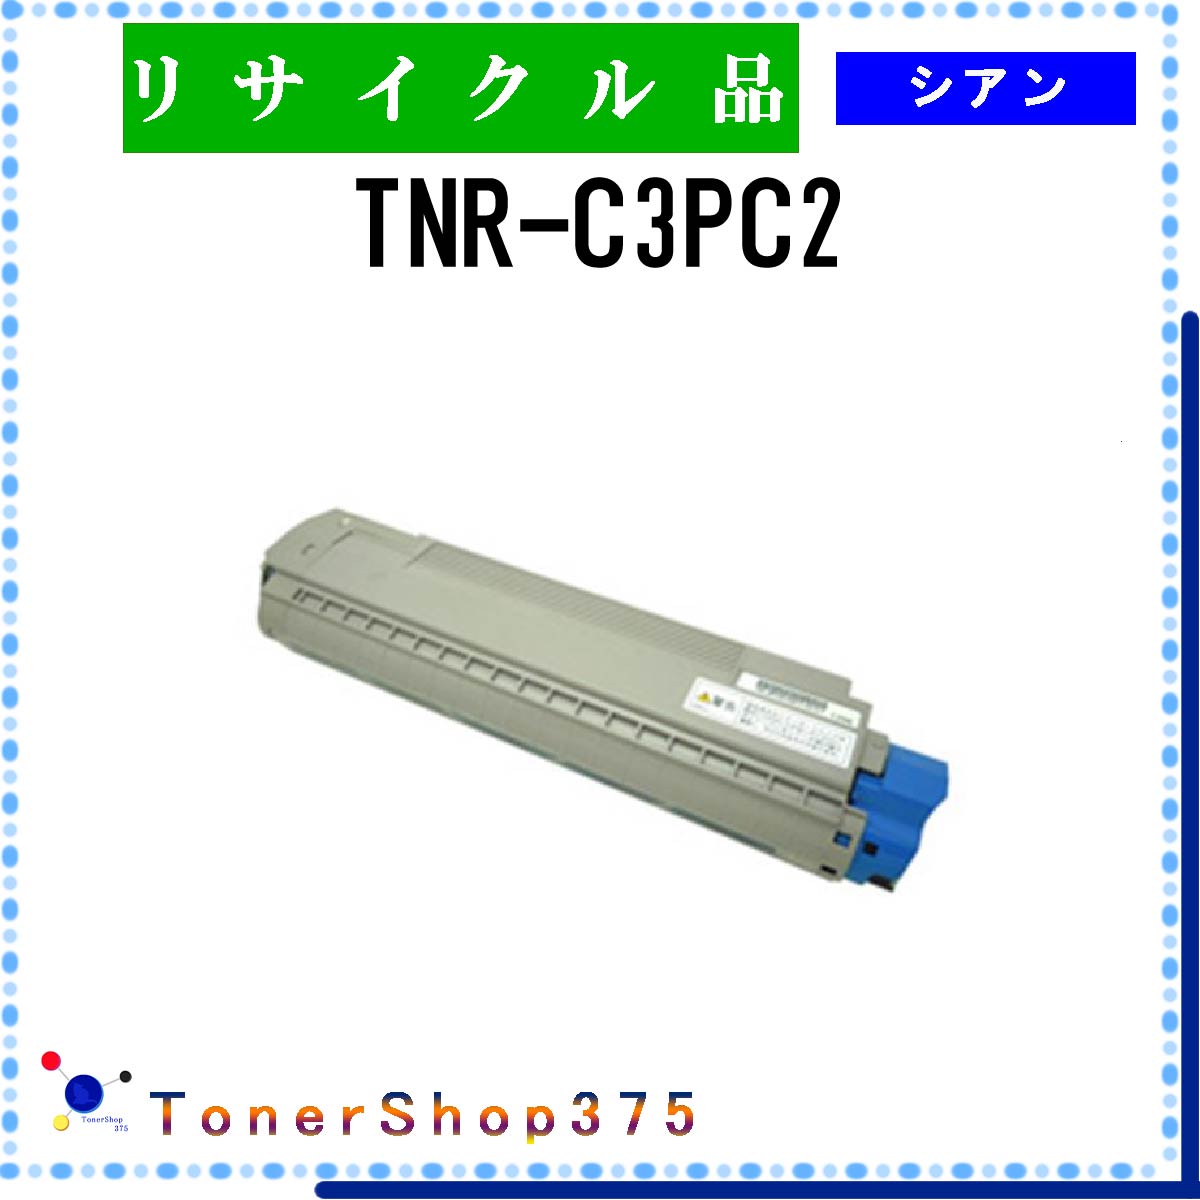 OKI y TNR-C3PC2 z VA TCN gi[ TCNHƉFH蒼 STMCF ݌ɕi 